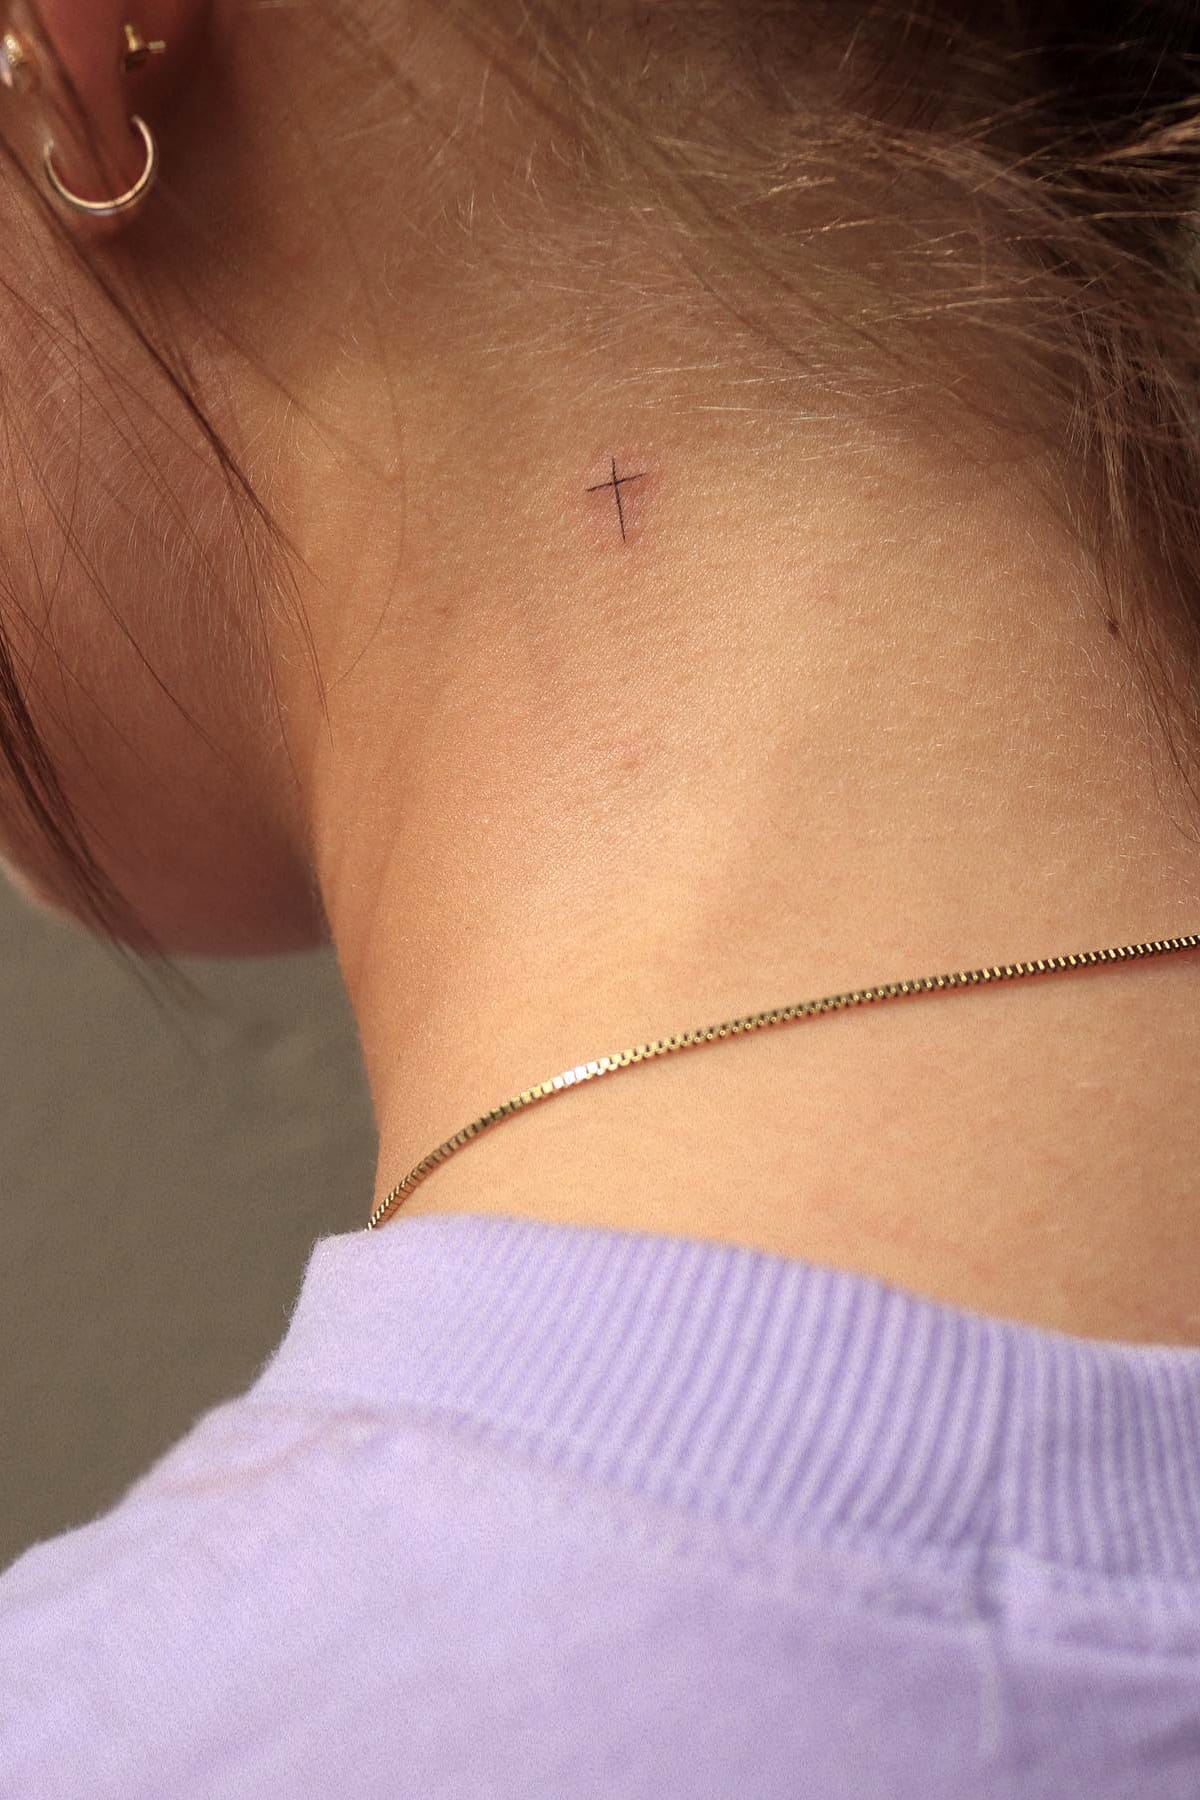 Small cross tattoo on neck